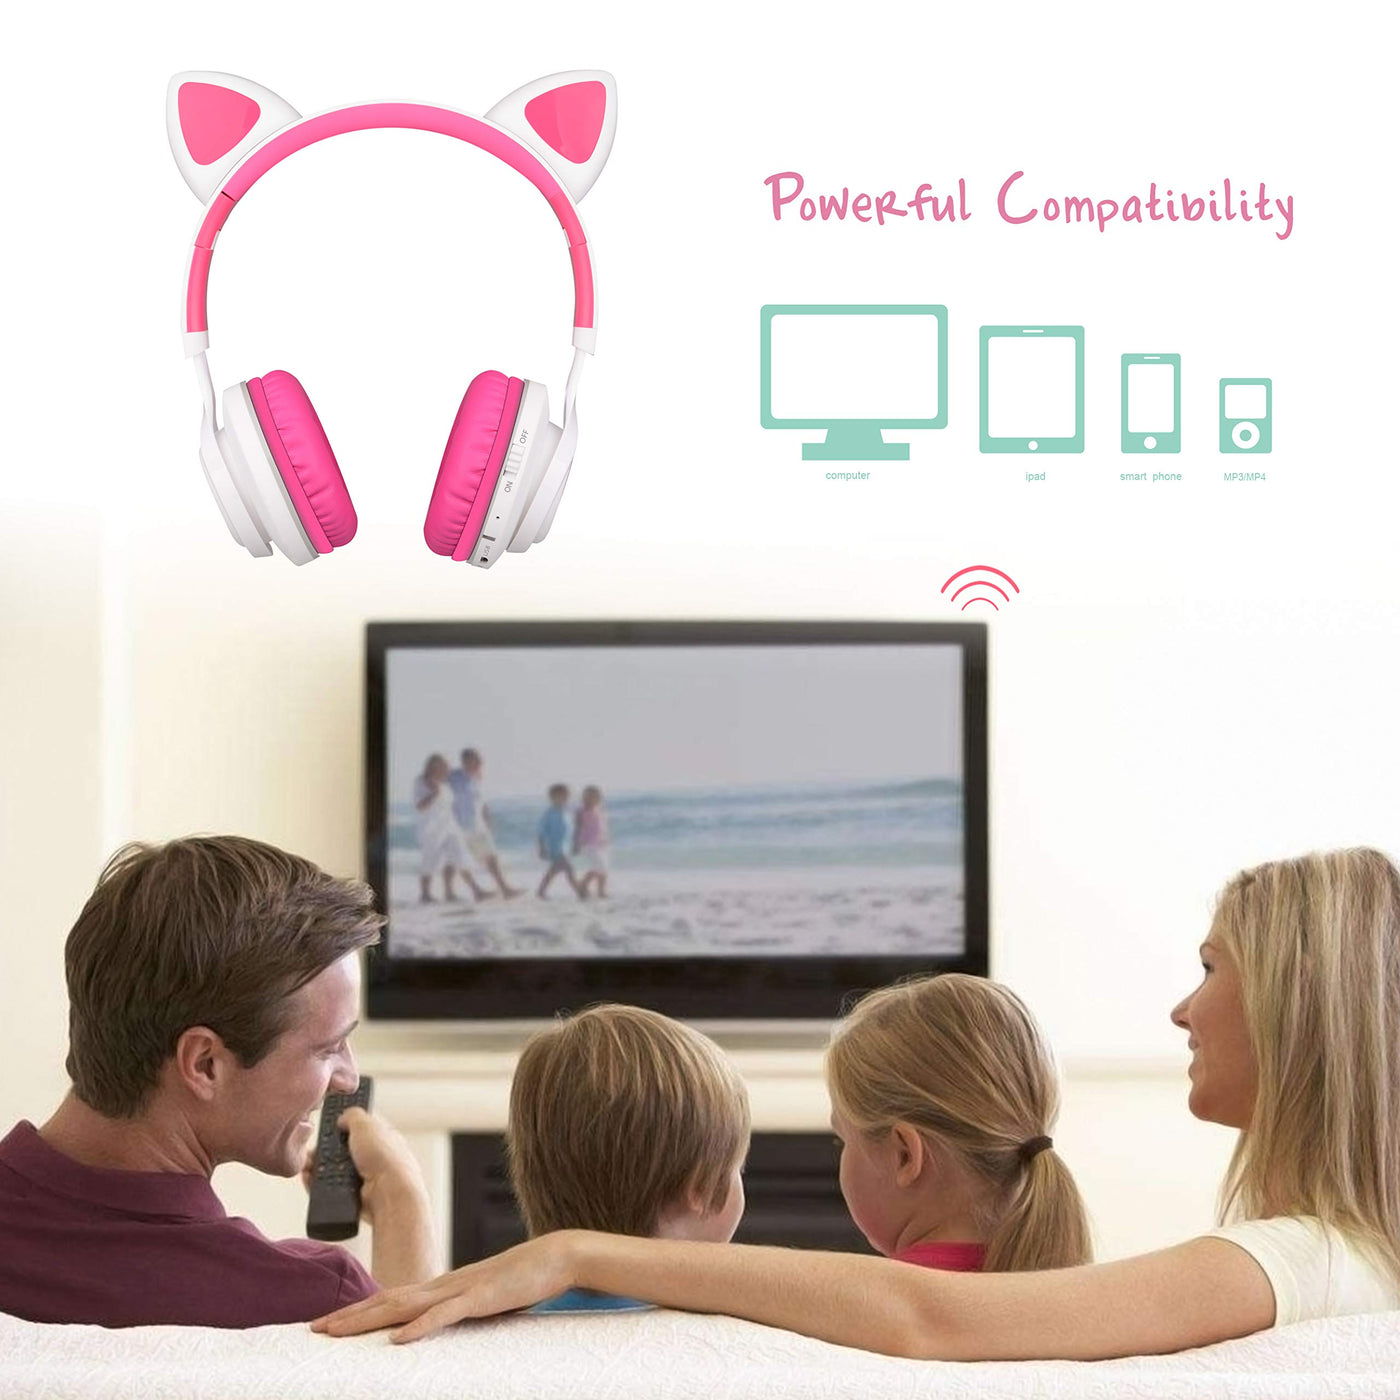 Riwbox Kids Bluetooth Headphones CT-7 Cat Ear LED